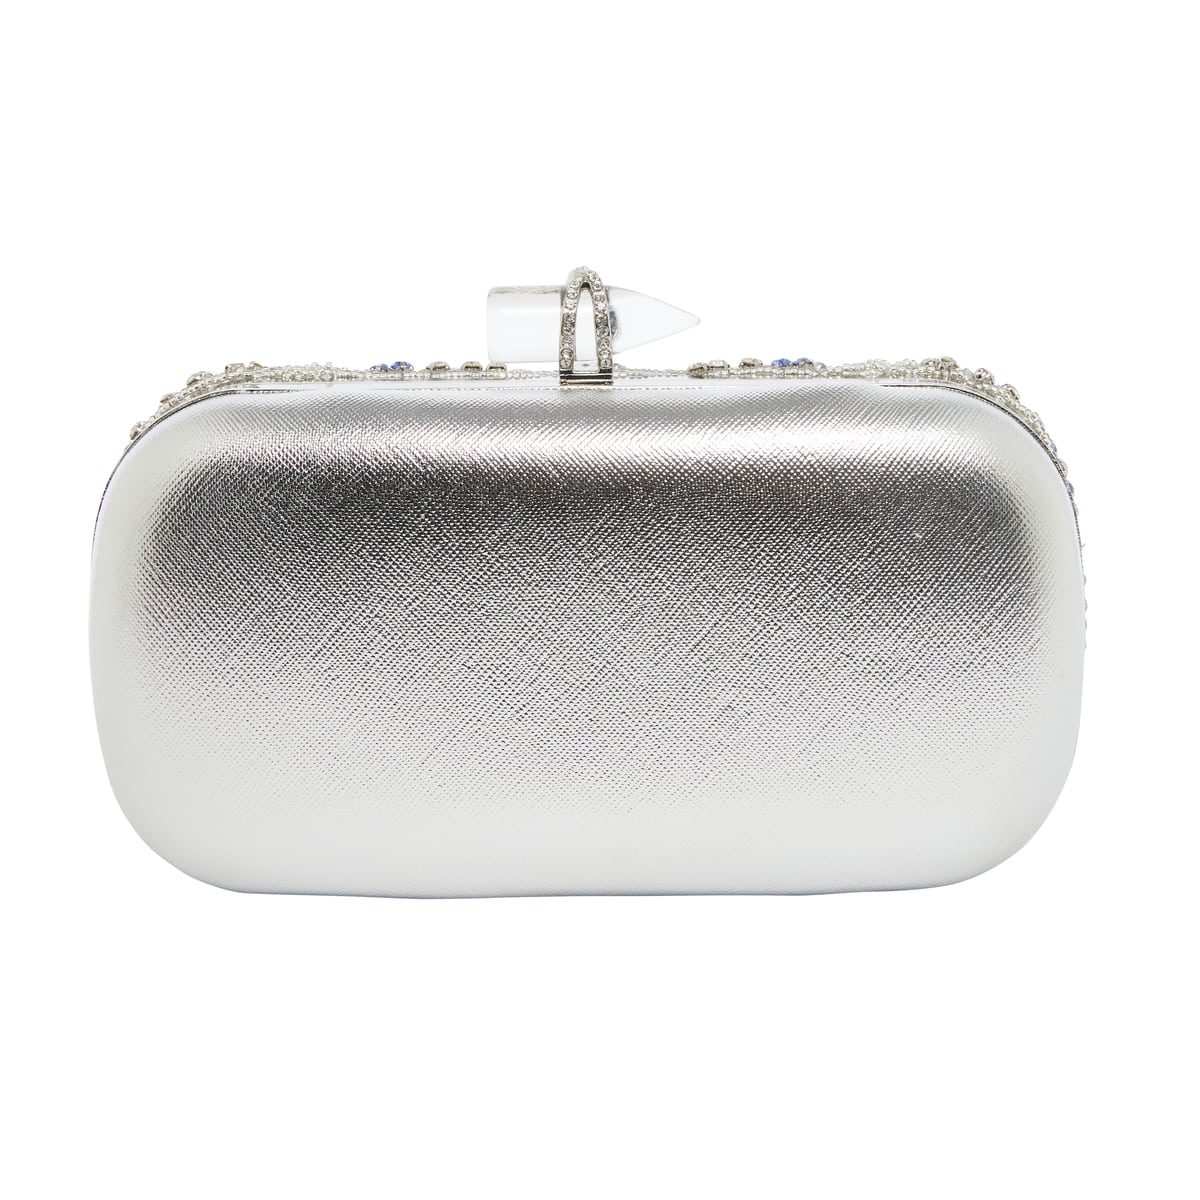 Gelsey Handbag in Silver Hard Case